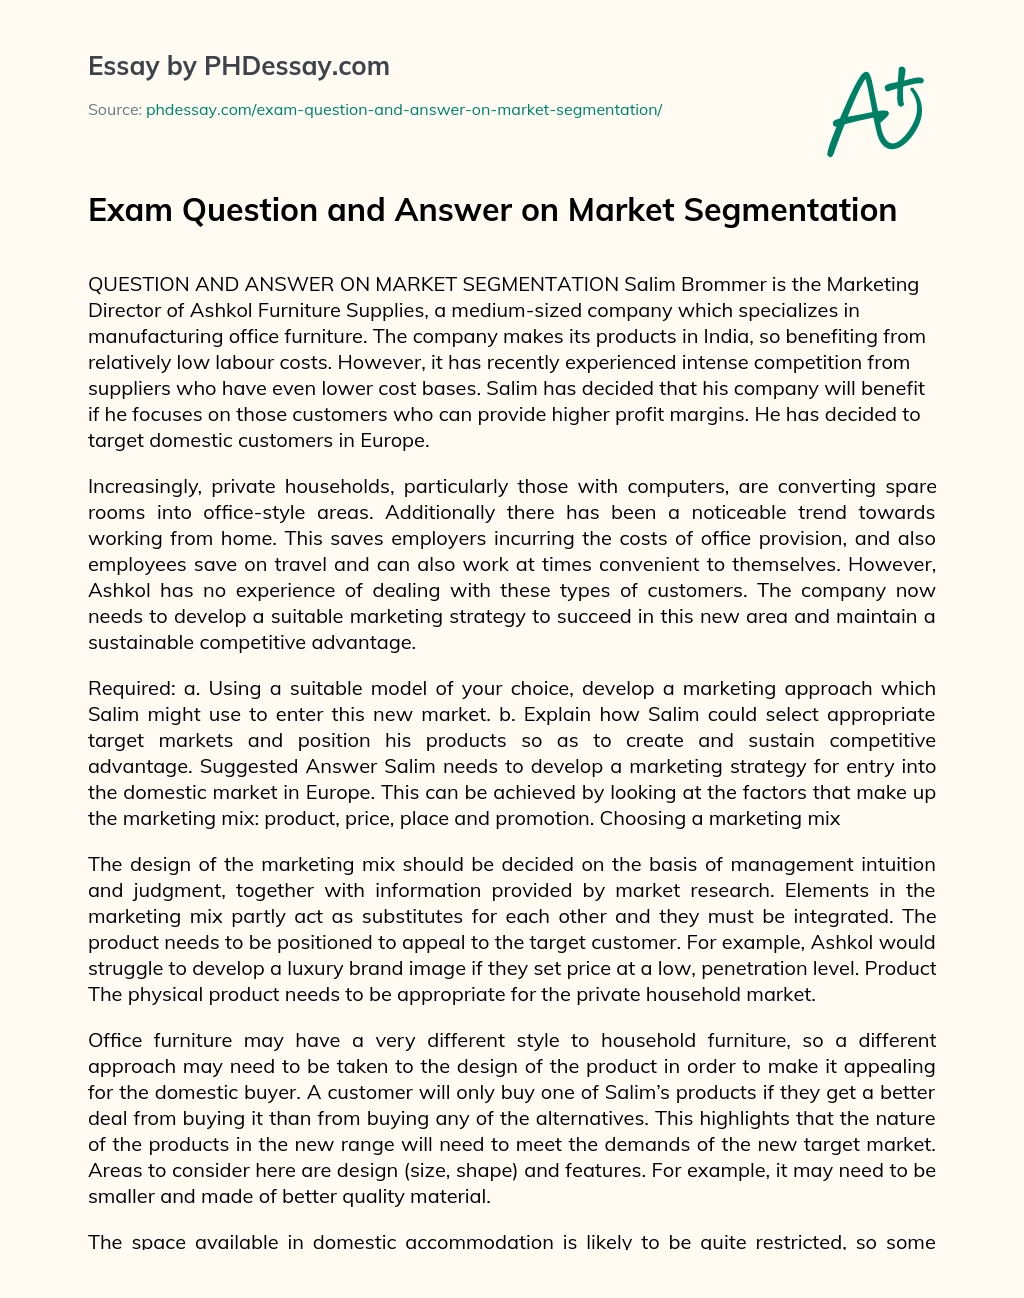 Exam Question and Answer on Market Segmentation essay